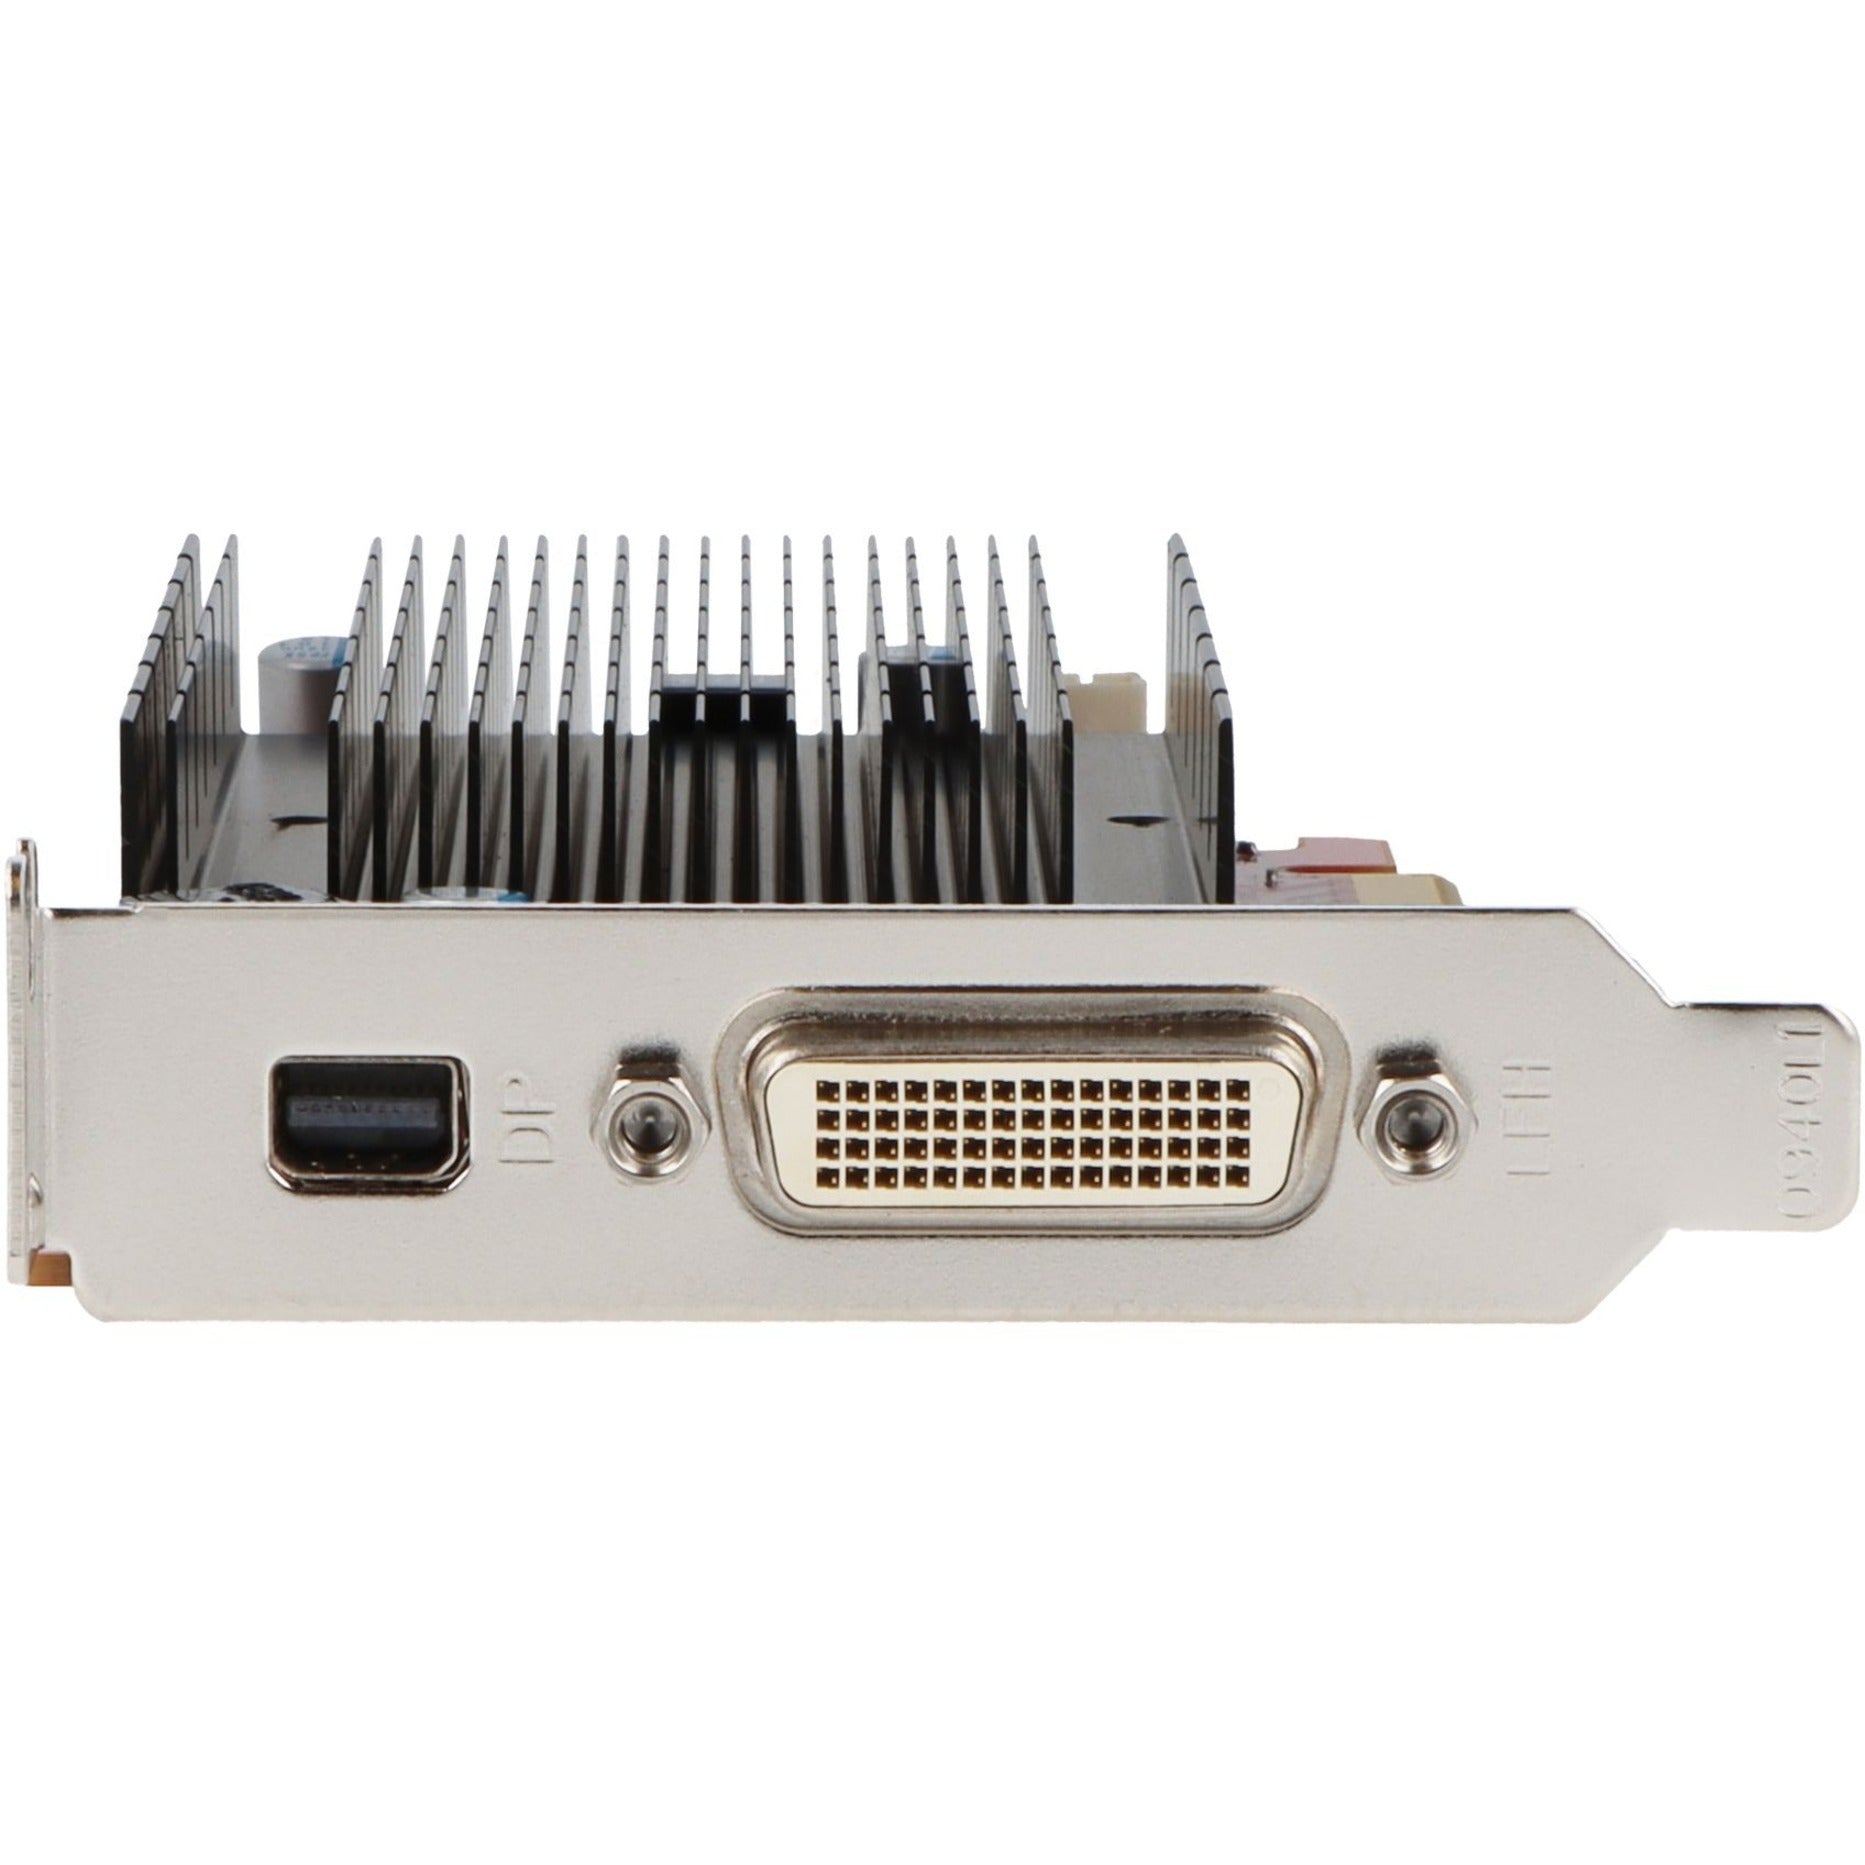 VisionTek 900456 Radeon HD 6350 Graphic Card, 1GB DDR3, Dual DVI-D/VGA, DirectX 11.0